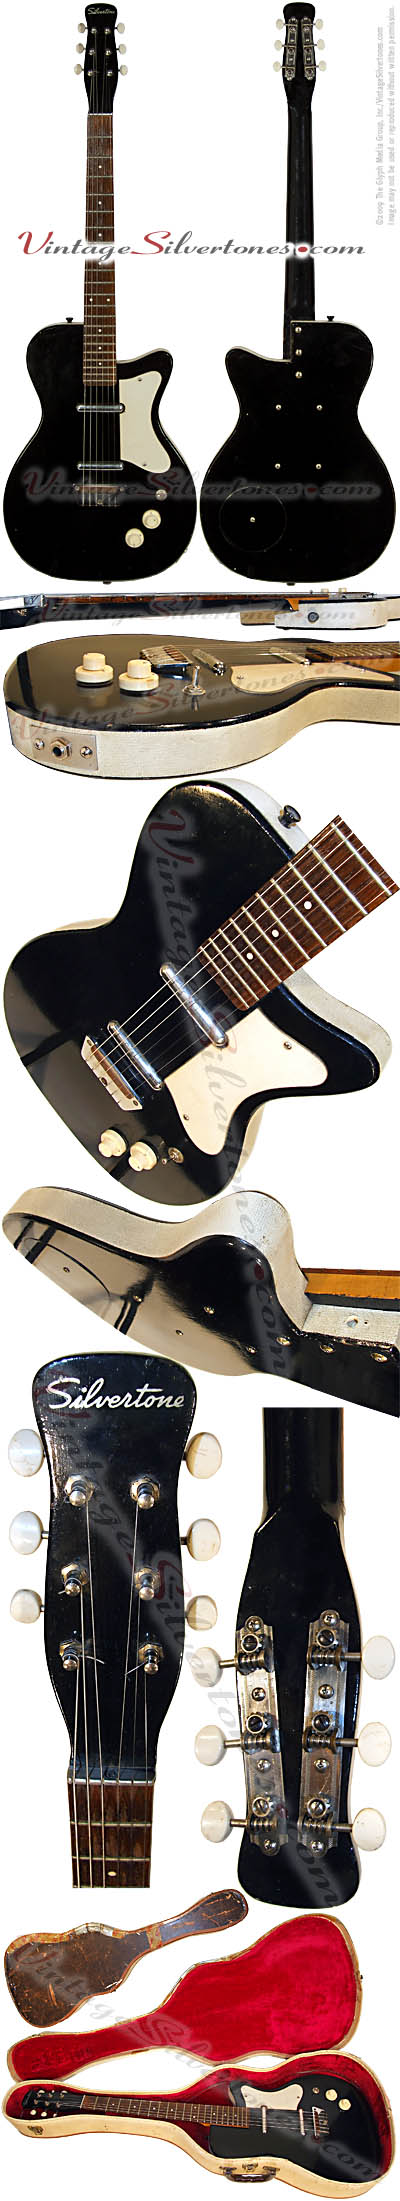 Silvertone 1303 made by Danelectro U2, two pickup, electric guitar, semi-hollow body, black, masonite body, lipstick pickup, made in 1958